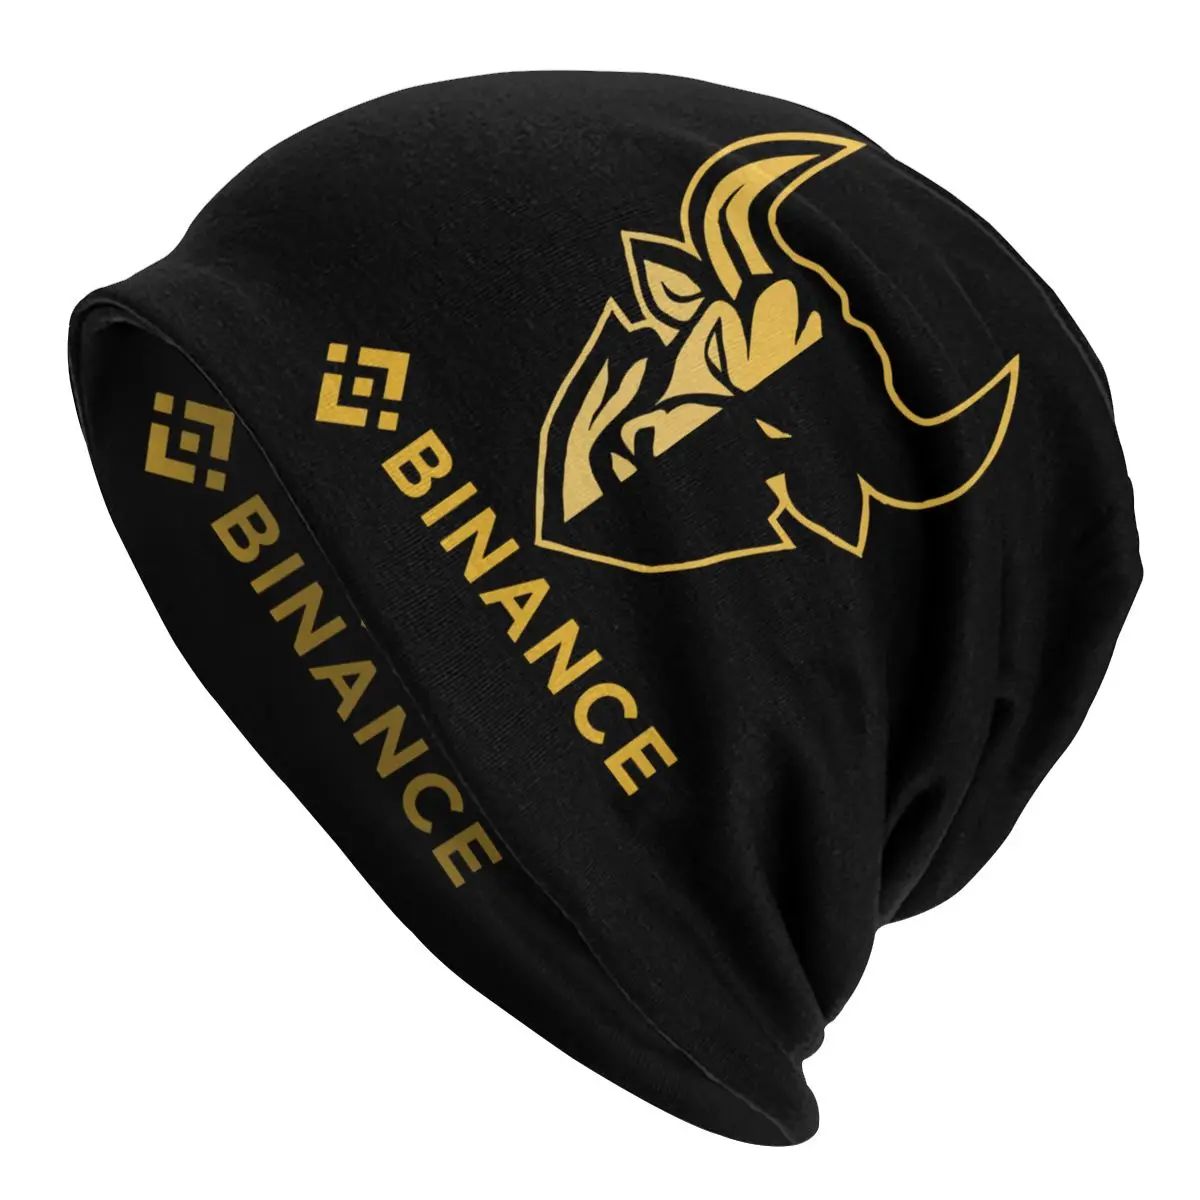 

Binance Bnb Crypto Coin Bonnet Hats Knit Hat Autumn Winter Outdoor Skullies Beanies Hat Men's Women's Adult Warm Dual-use Cap